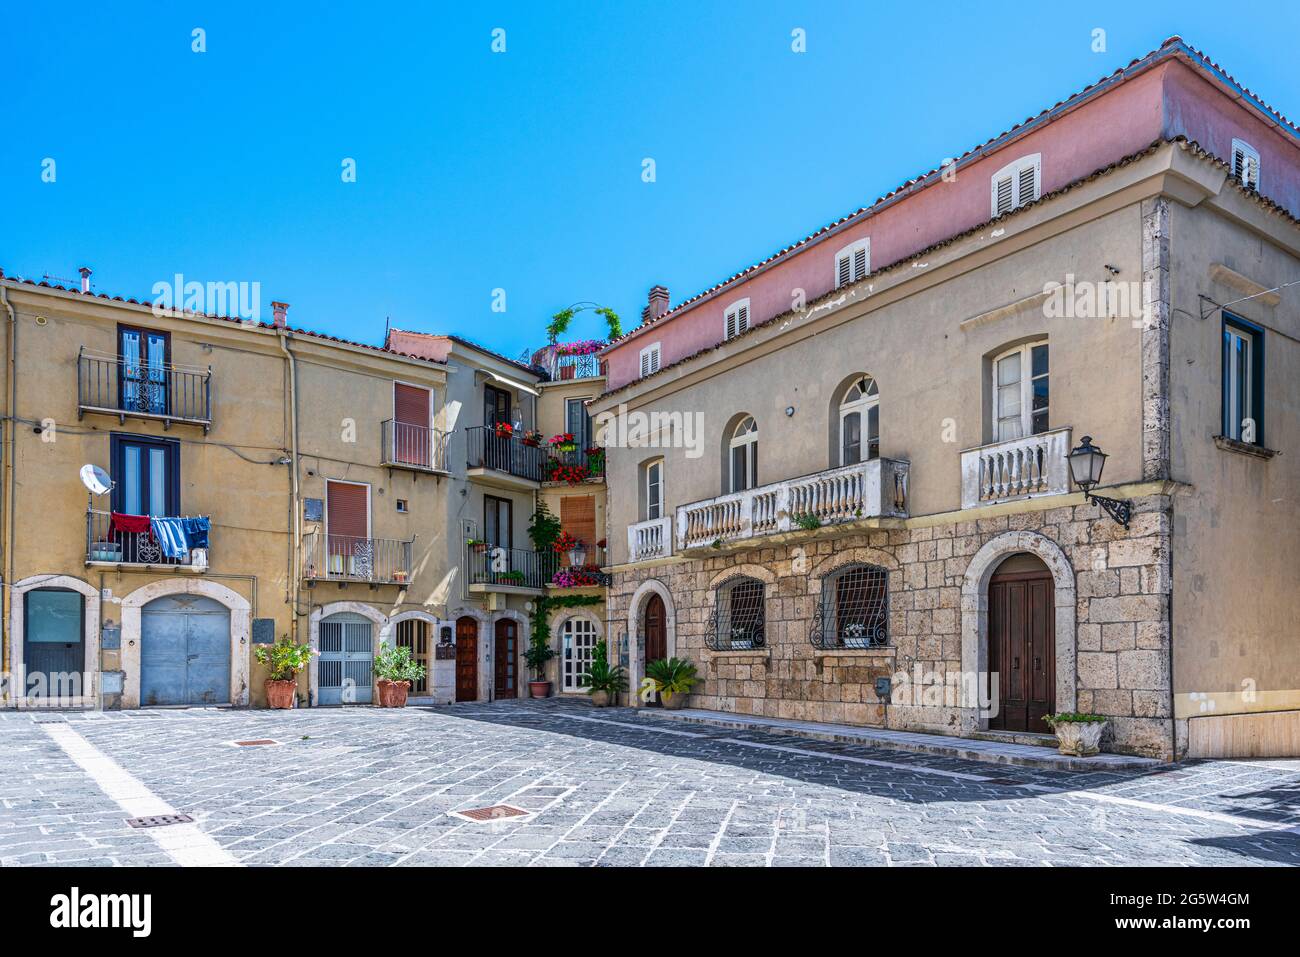 characteristic square in the historic center of Isernia. Isernia, Molise, Italy, Europe Stock Photo